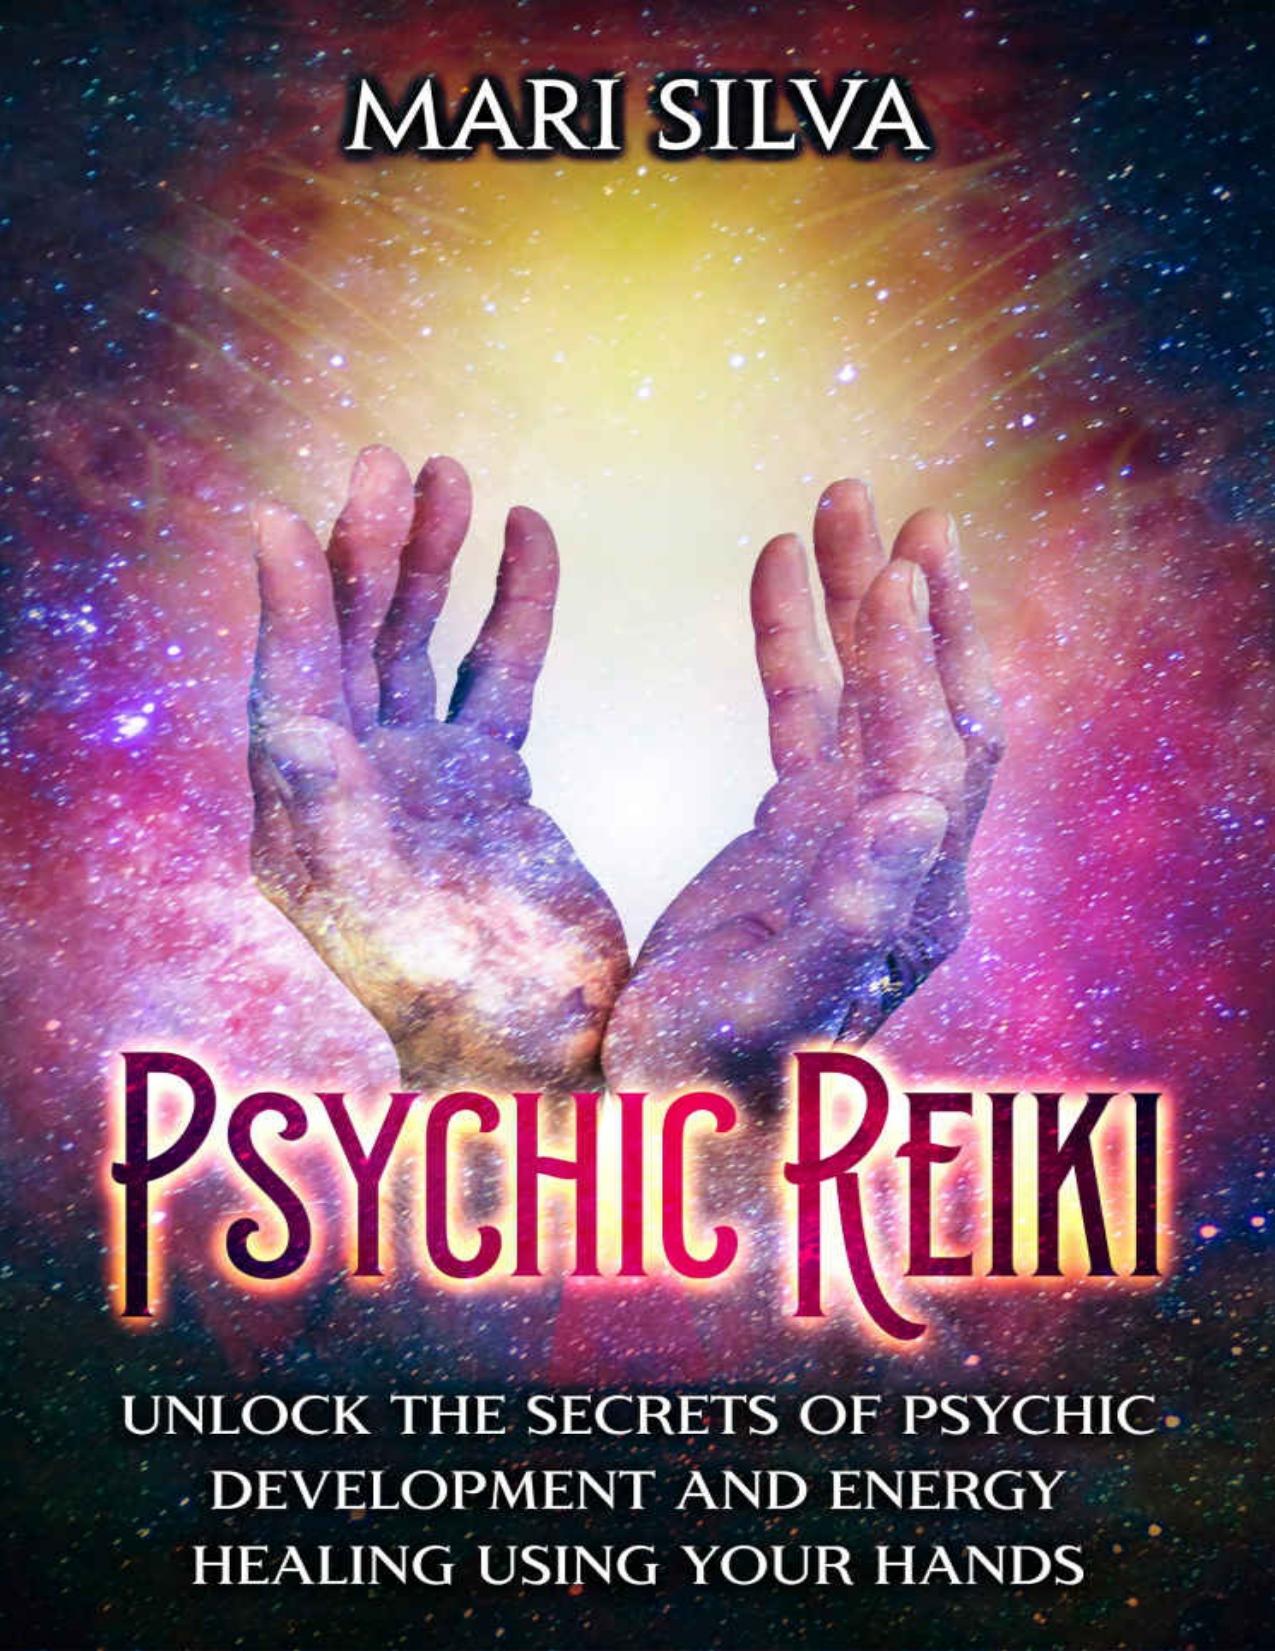 Psychic Reiki: Unlock the Secrets of Psychic Development and Energy Healing Using Your Hands by Silva Mari